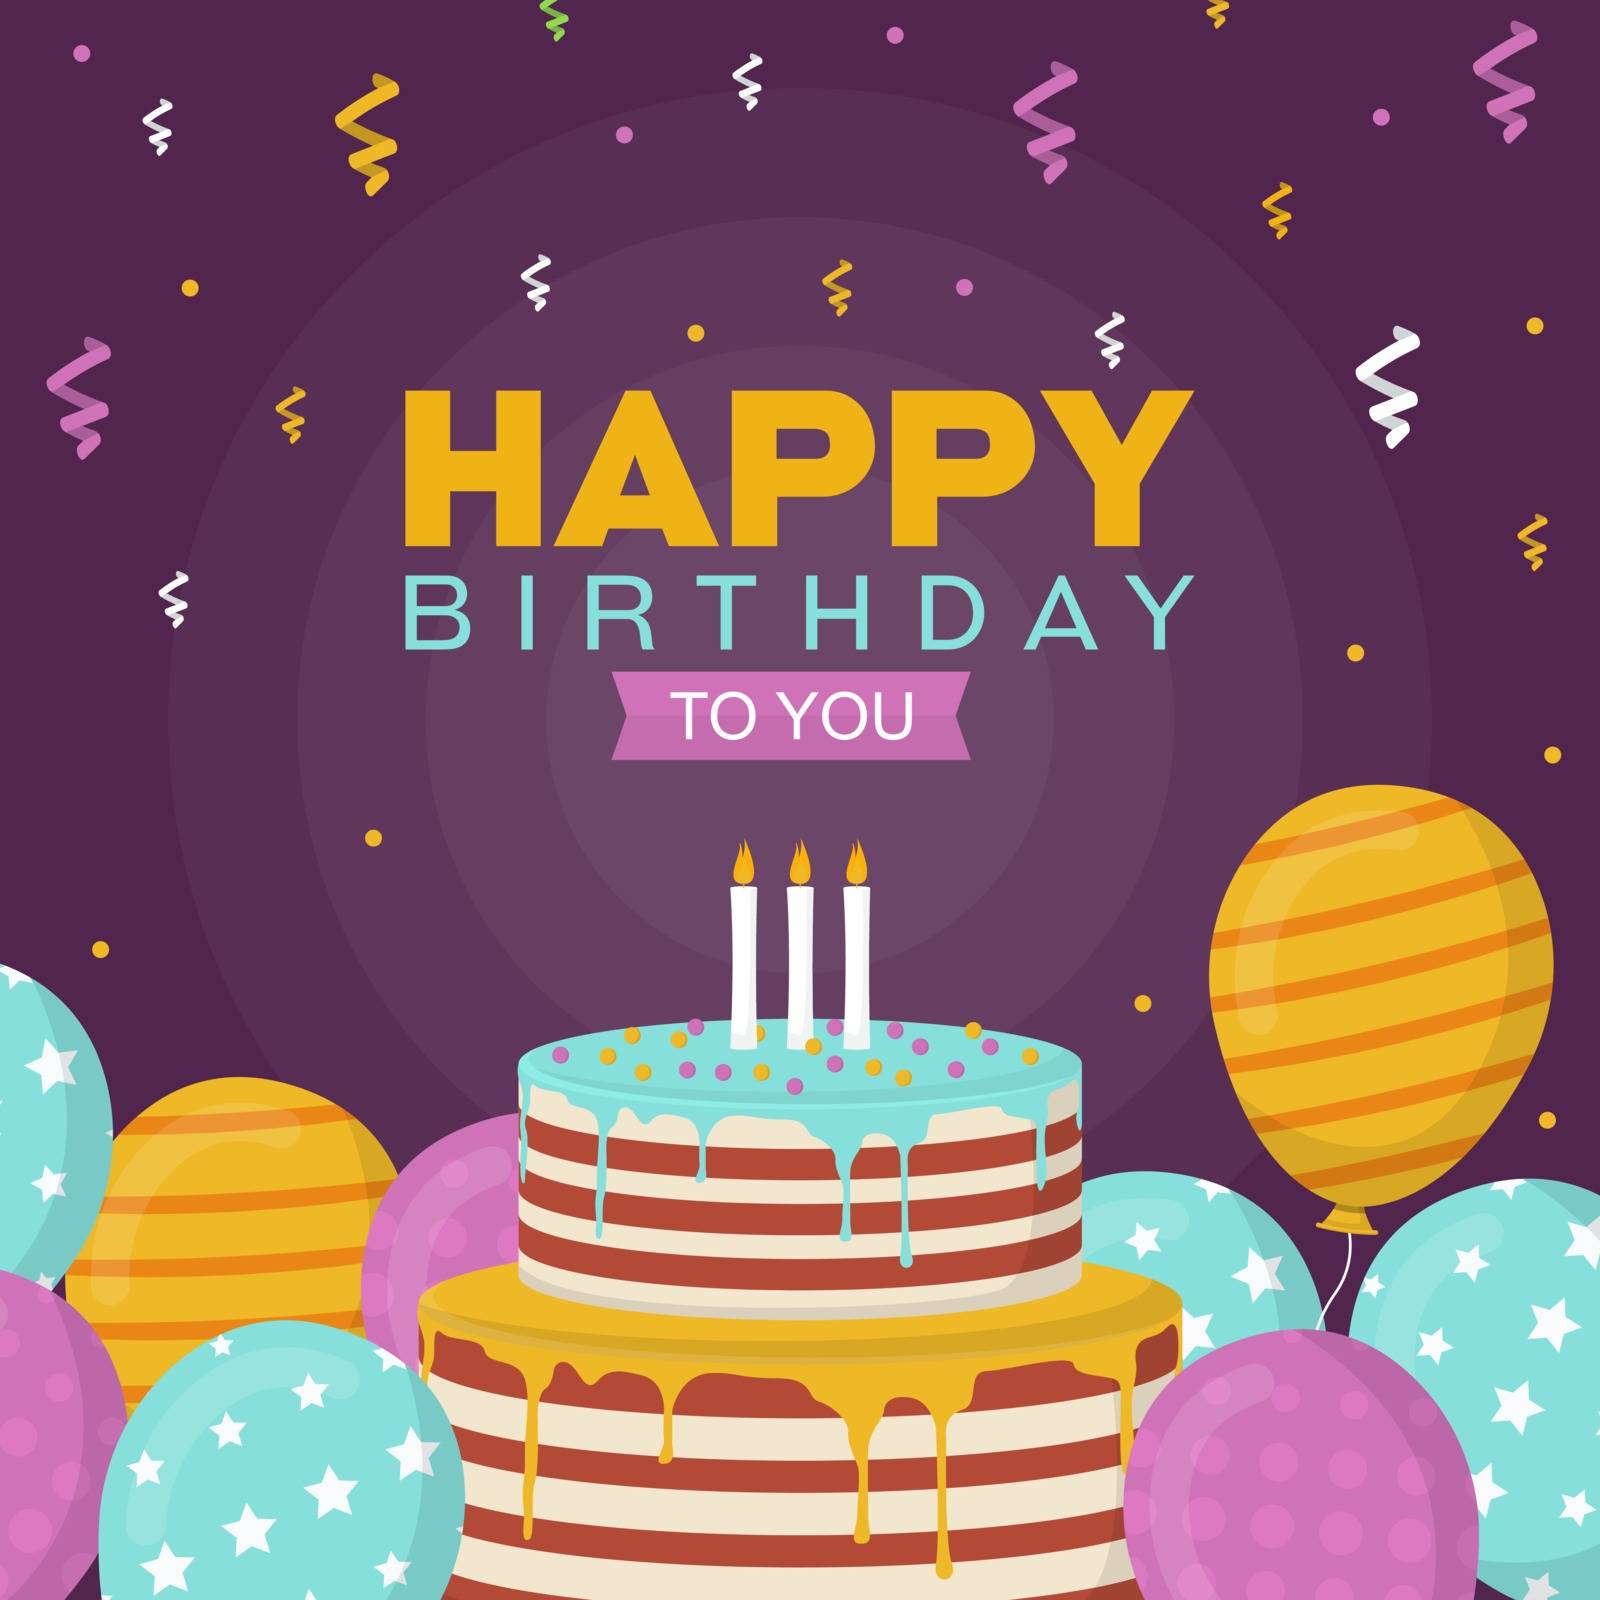 Happy Birthday Celebration Party Balloon Cake Banner Greeting Card by jongcreative